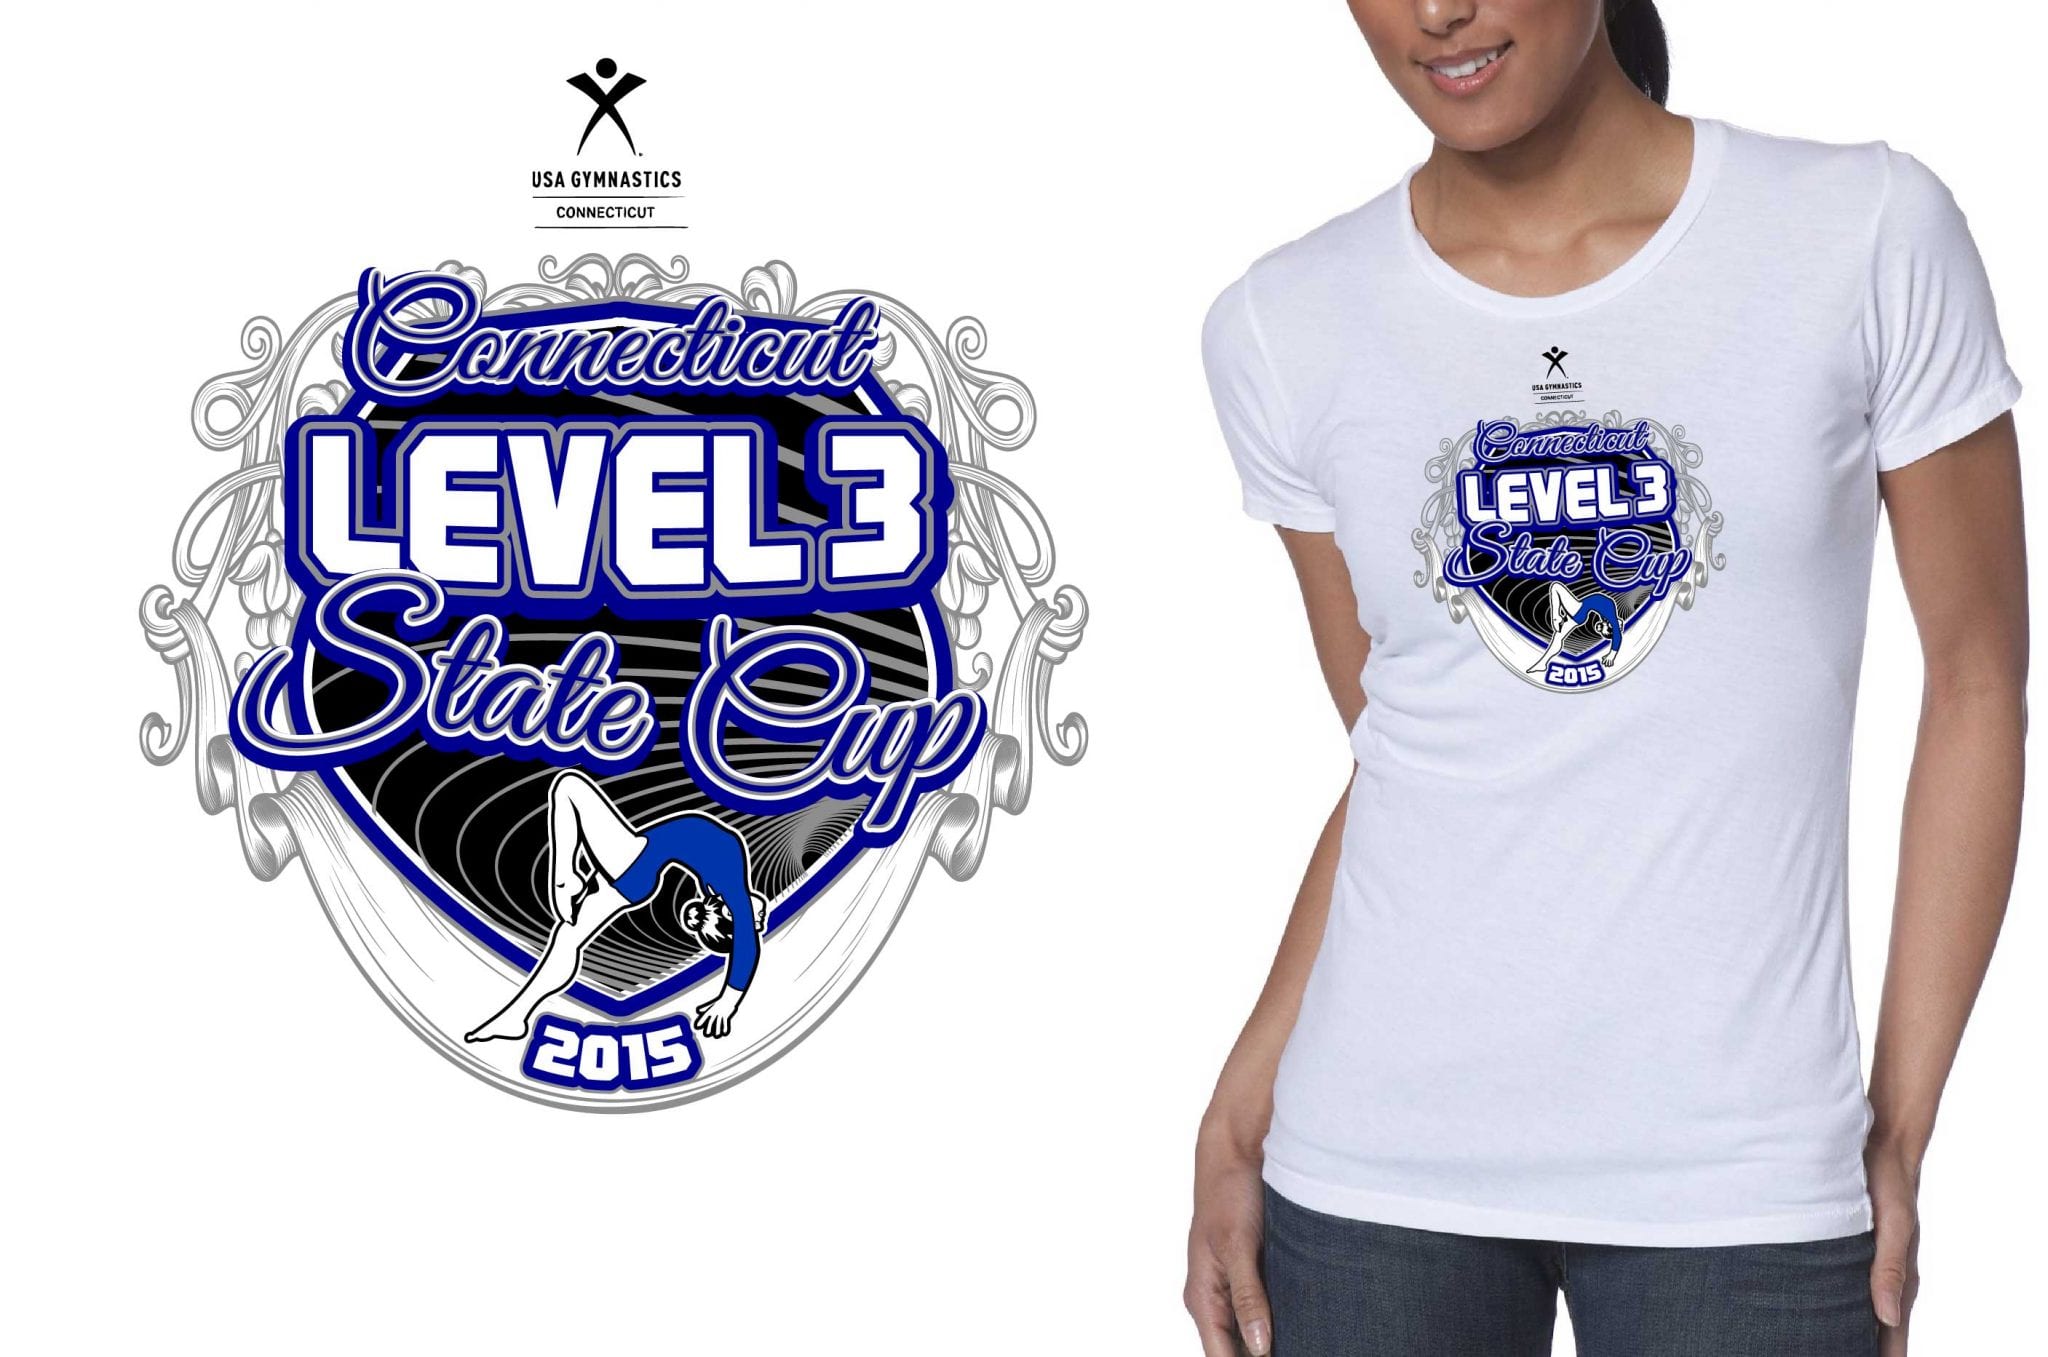 2015 CT Level 3 State Cup Girls Gymnastics Vector Tshirt Logo Design